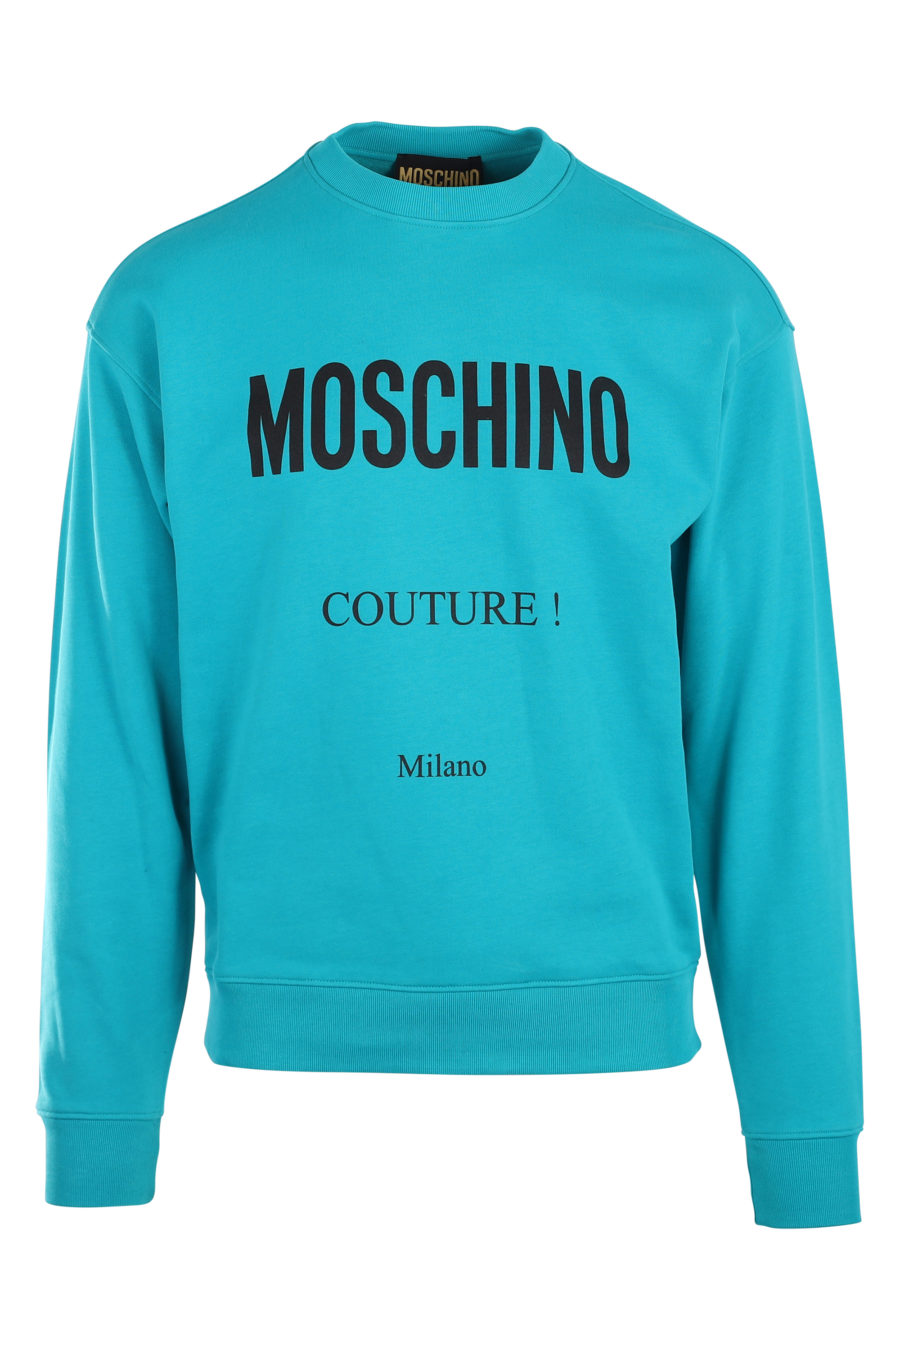 Turquoise sweatshirt with milano "fantasy" logo - IMG 9931